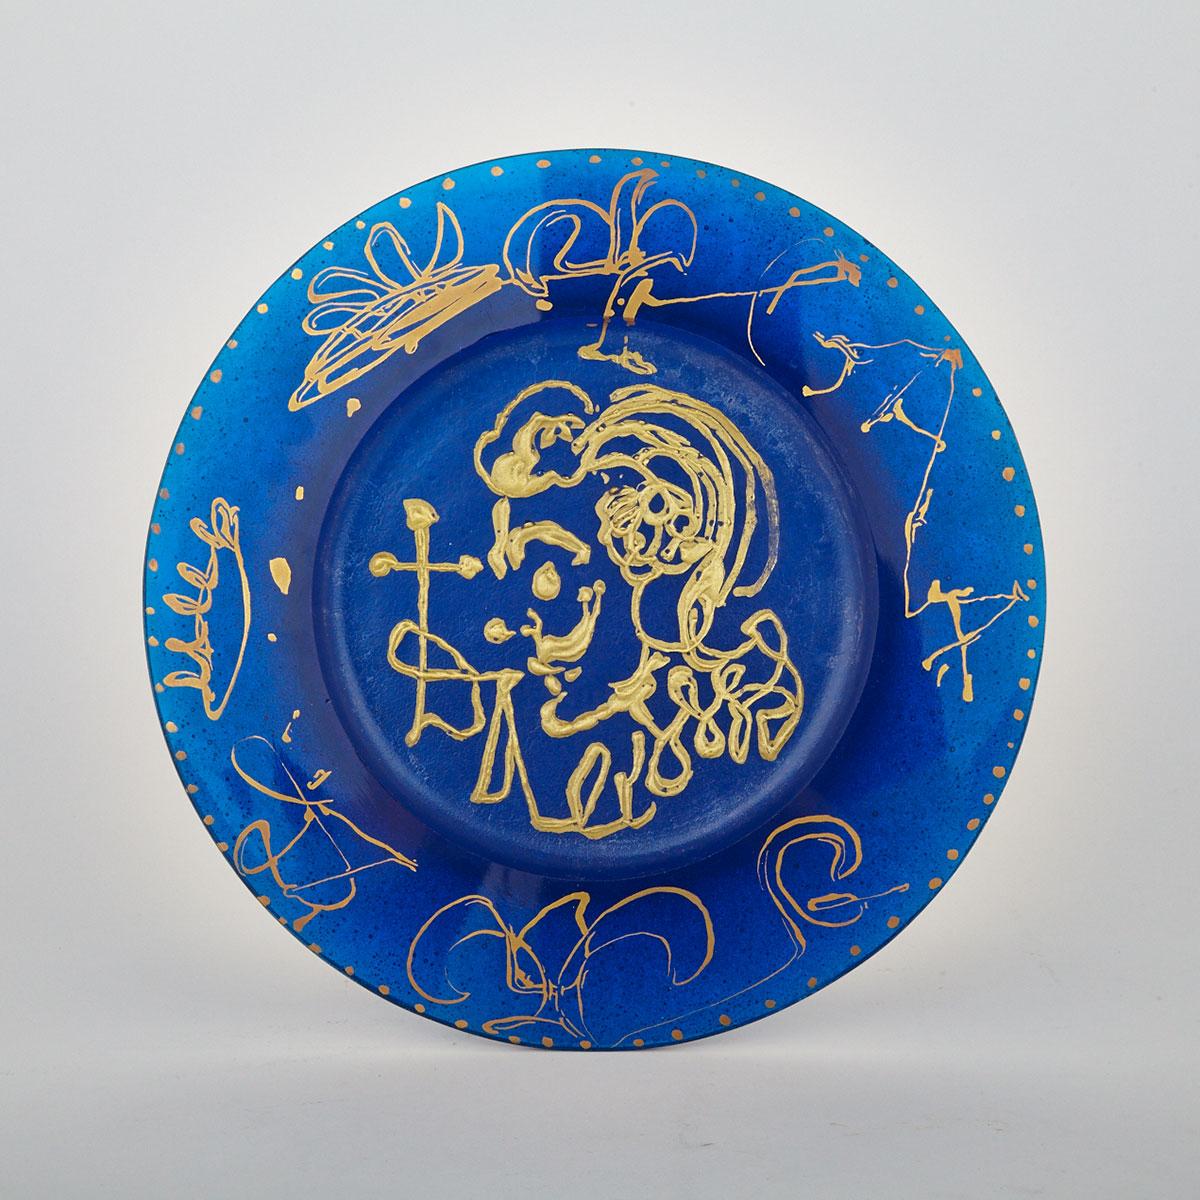 Daum Pâte-de-Verre ‘Le Triomphale’ Plate, Salvador Dali, 685/2000, 1974